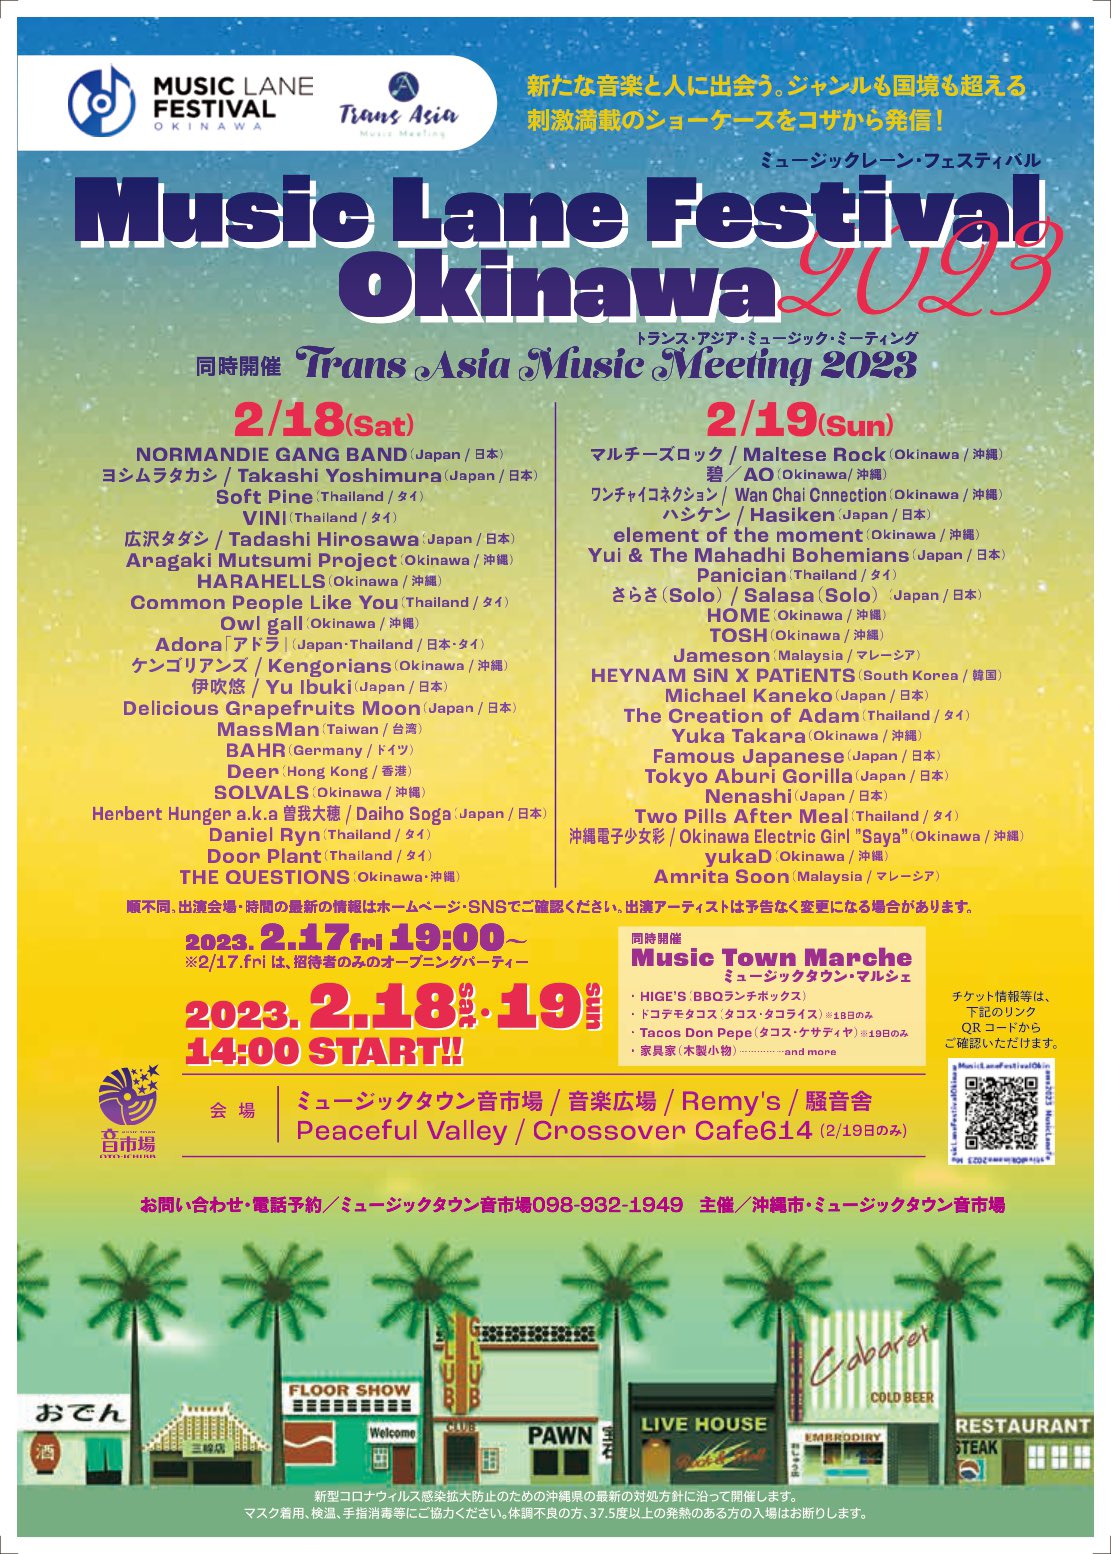 Music Lane Festival Okinawa 2023